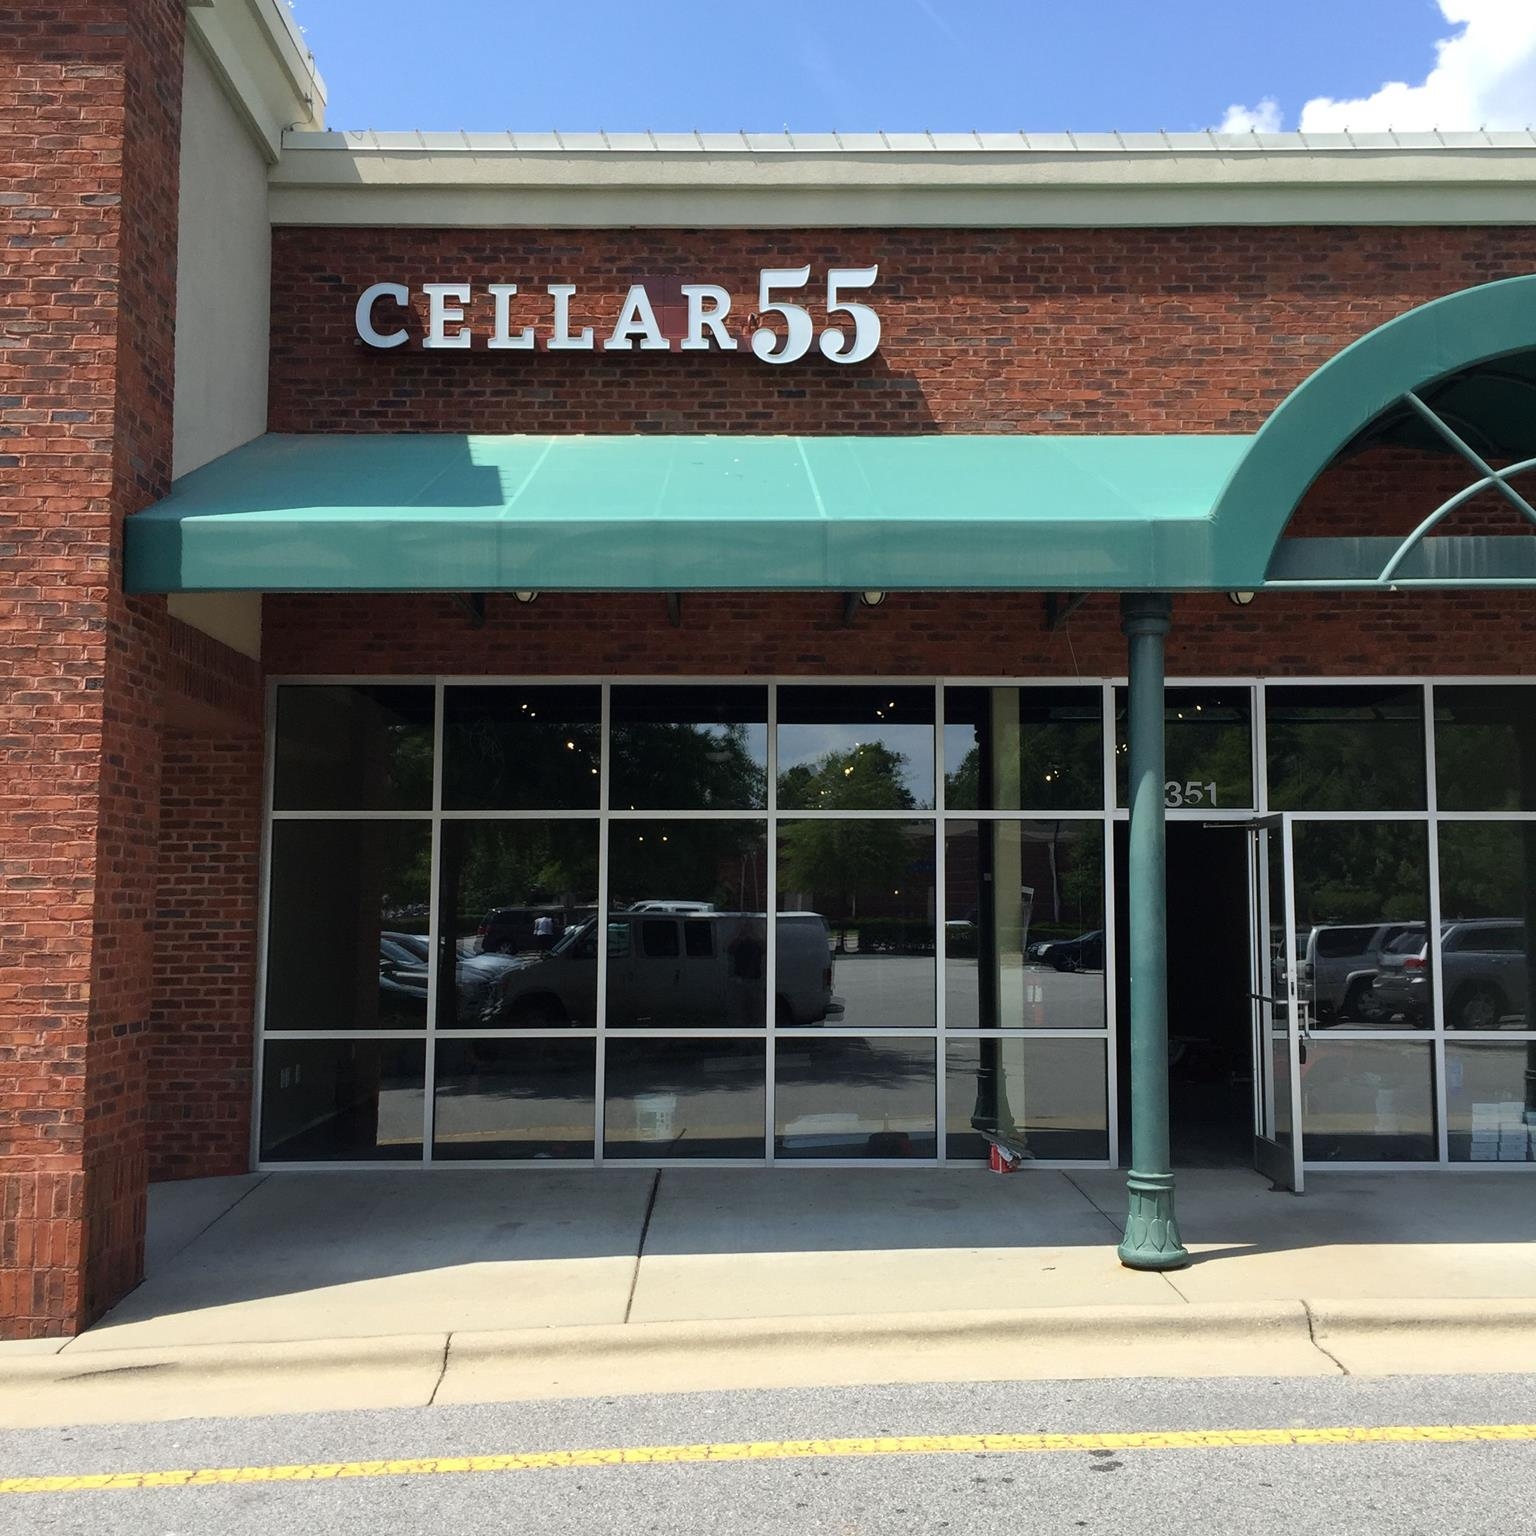 Celler55 Letters on Storefront